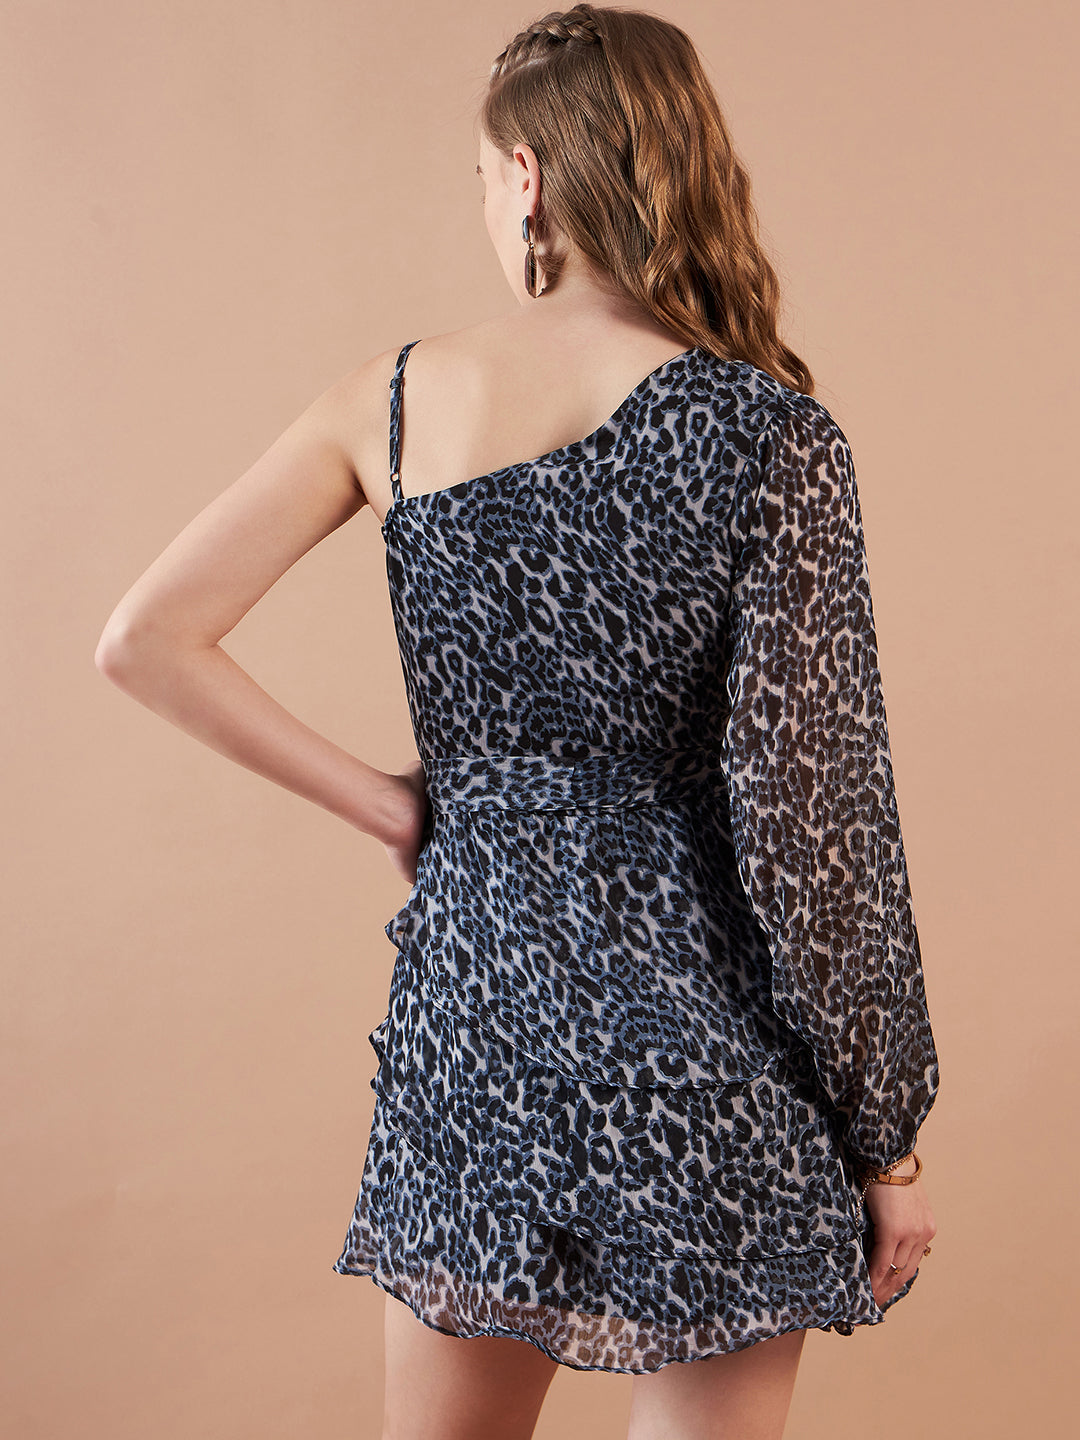 Shop Women Printed Dresses Online.